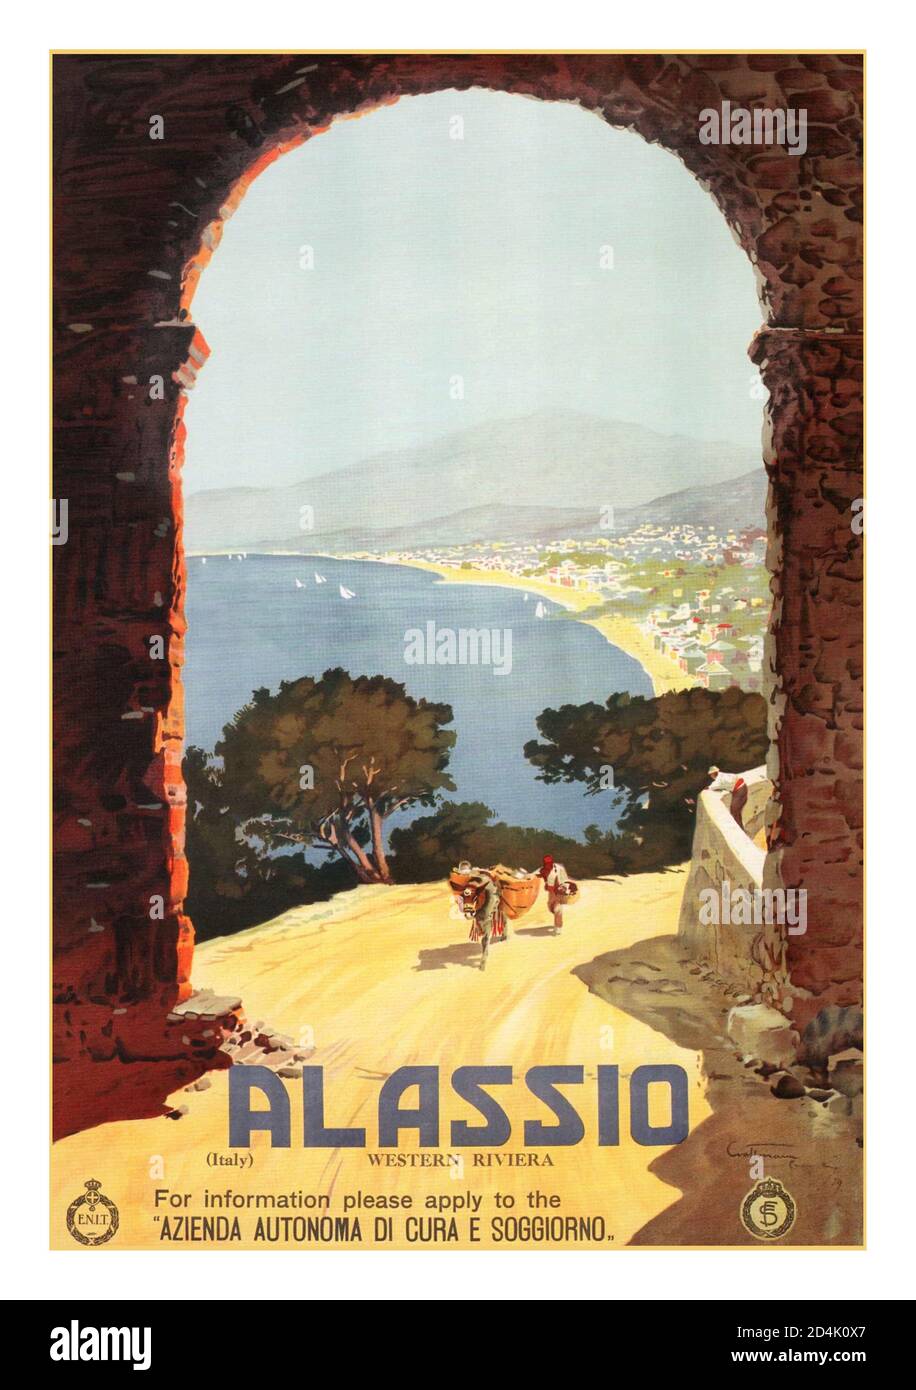 ALASSIO Vintage Travel Poster Alassio Italy, Vintage Travel Poster printed in 1929  Aurelio Craffonara,(1875-1945) Stock Photo